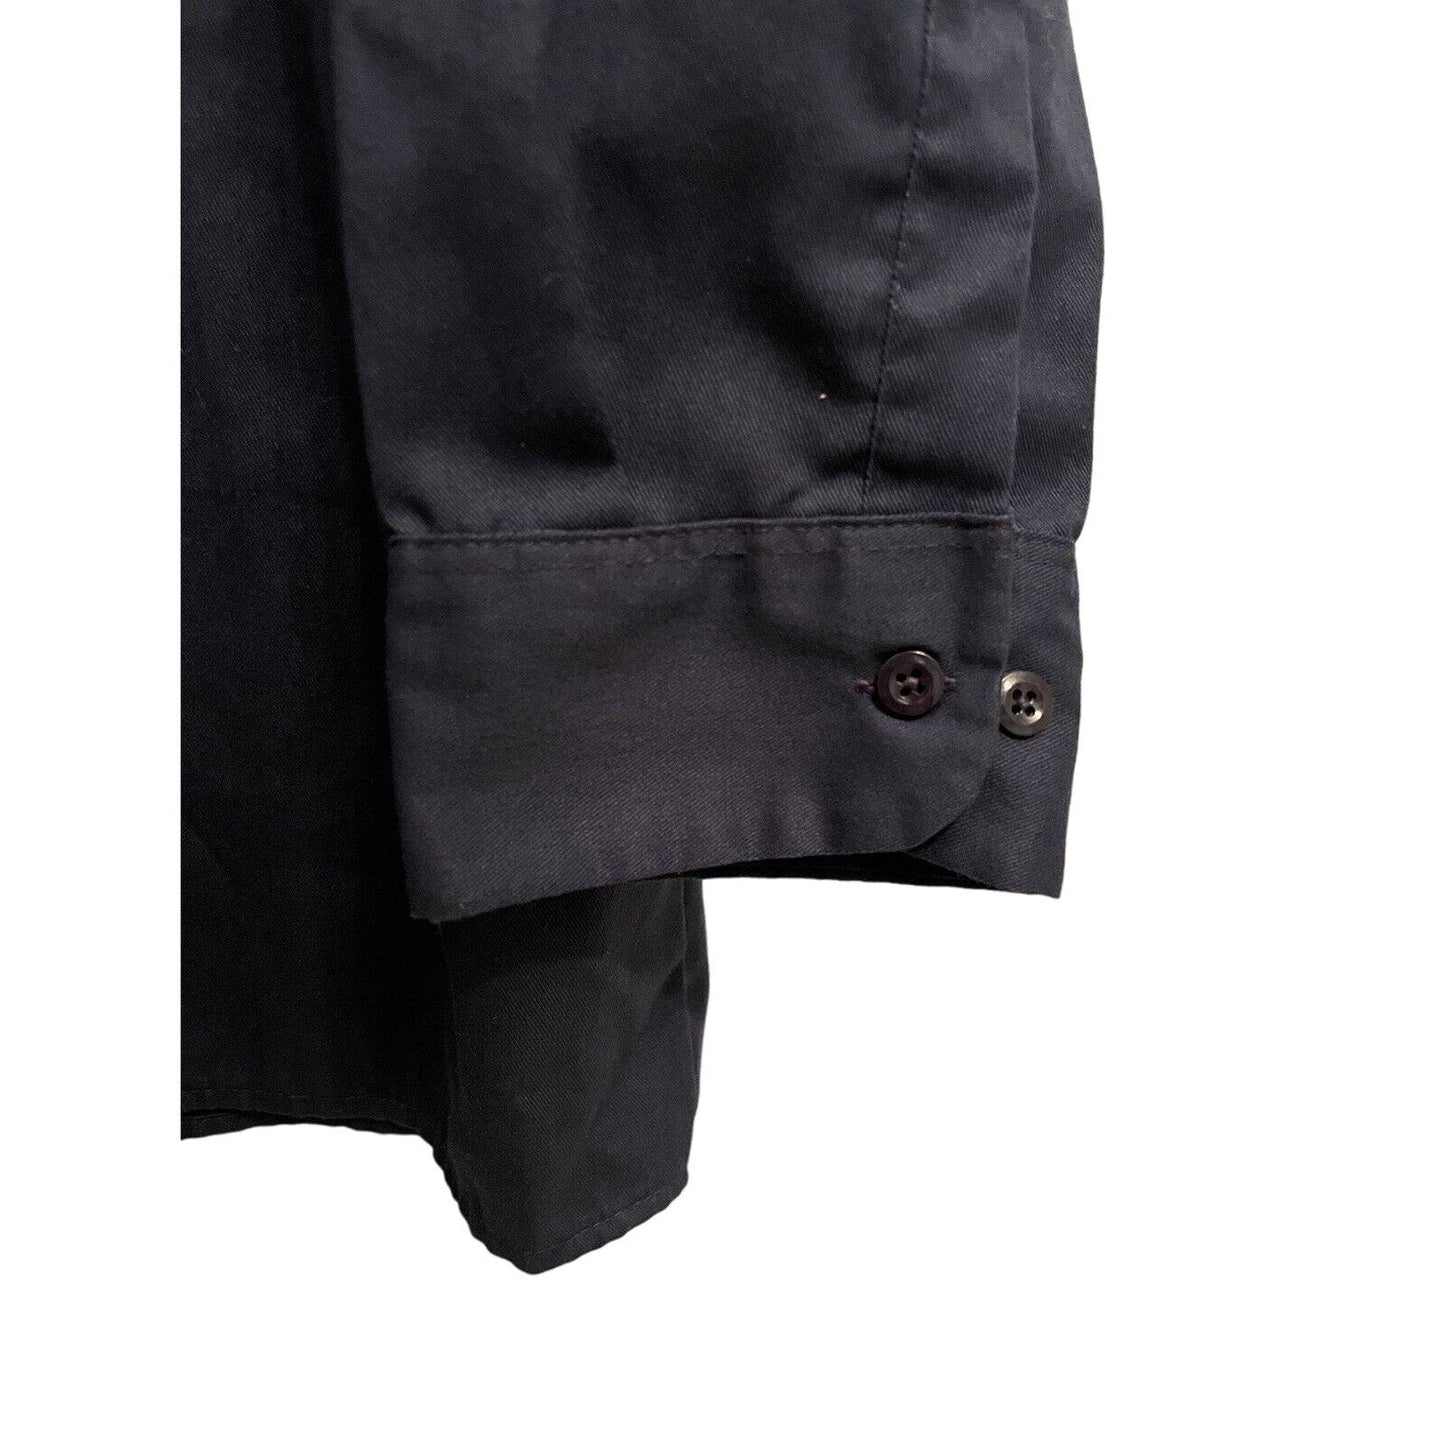 Durable Dickies 574 Men's Long Sleeve Work Shirt 2XL XXL Blue with Pockets